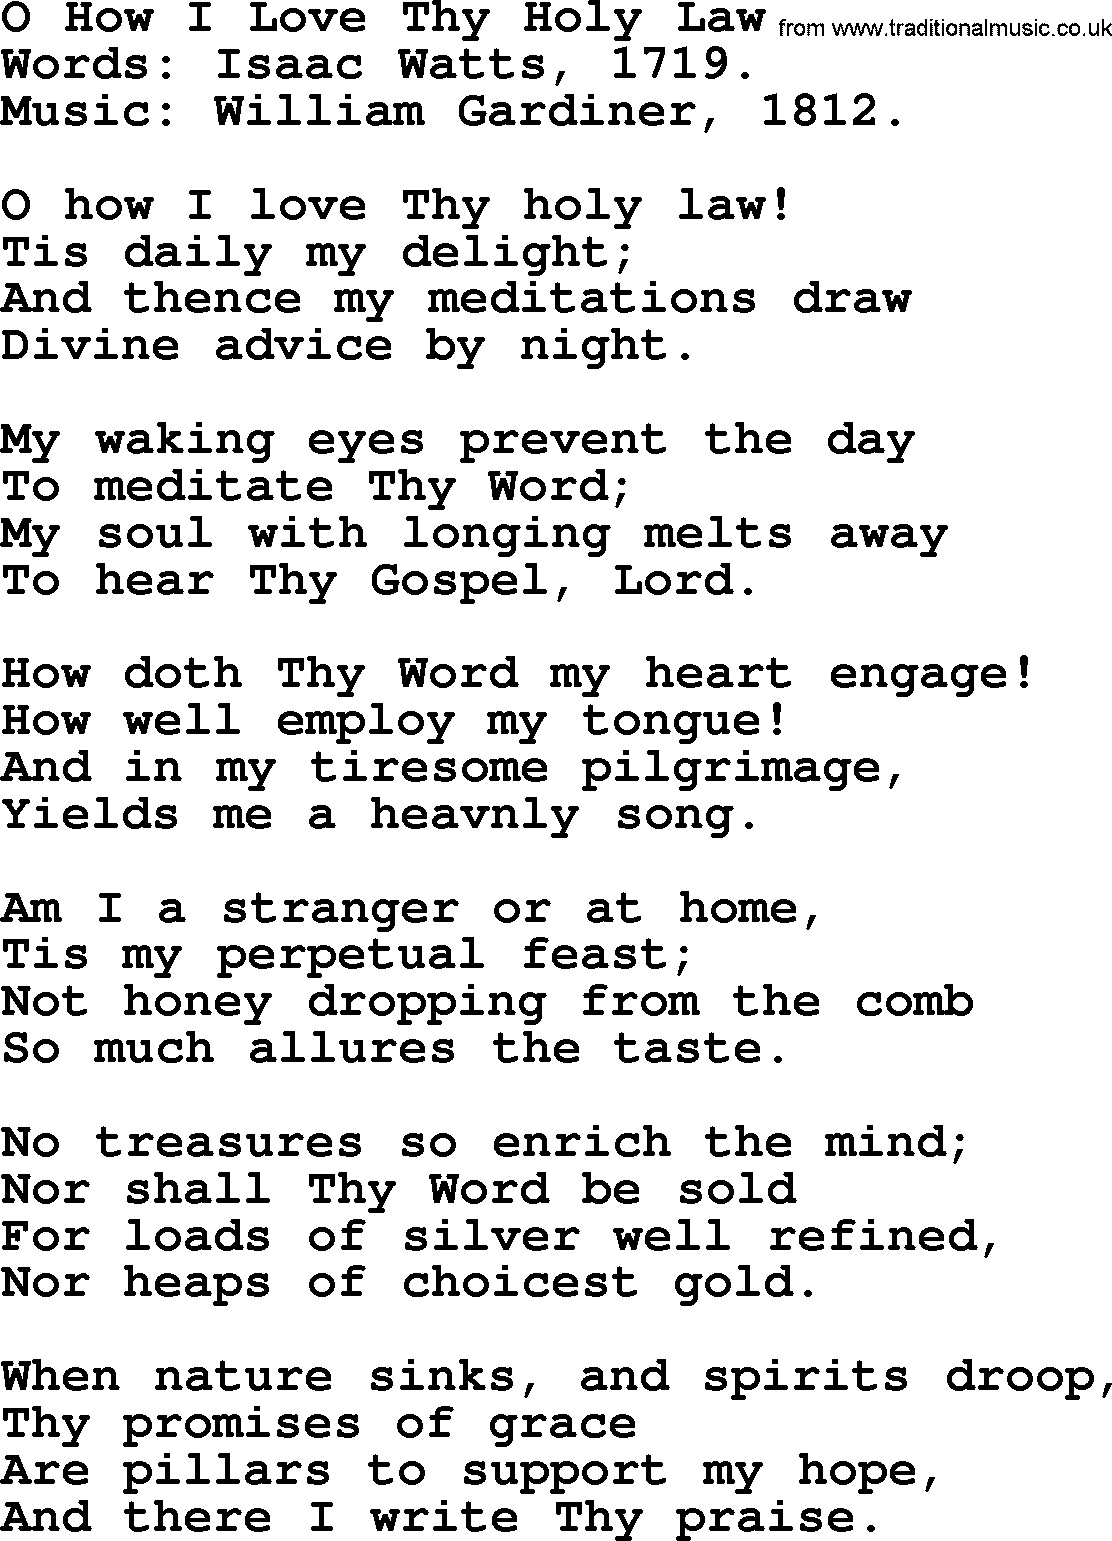 Isaac Watts Christian hymn: O How I Love Thy Holy Law- lyricss